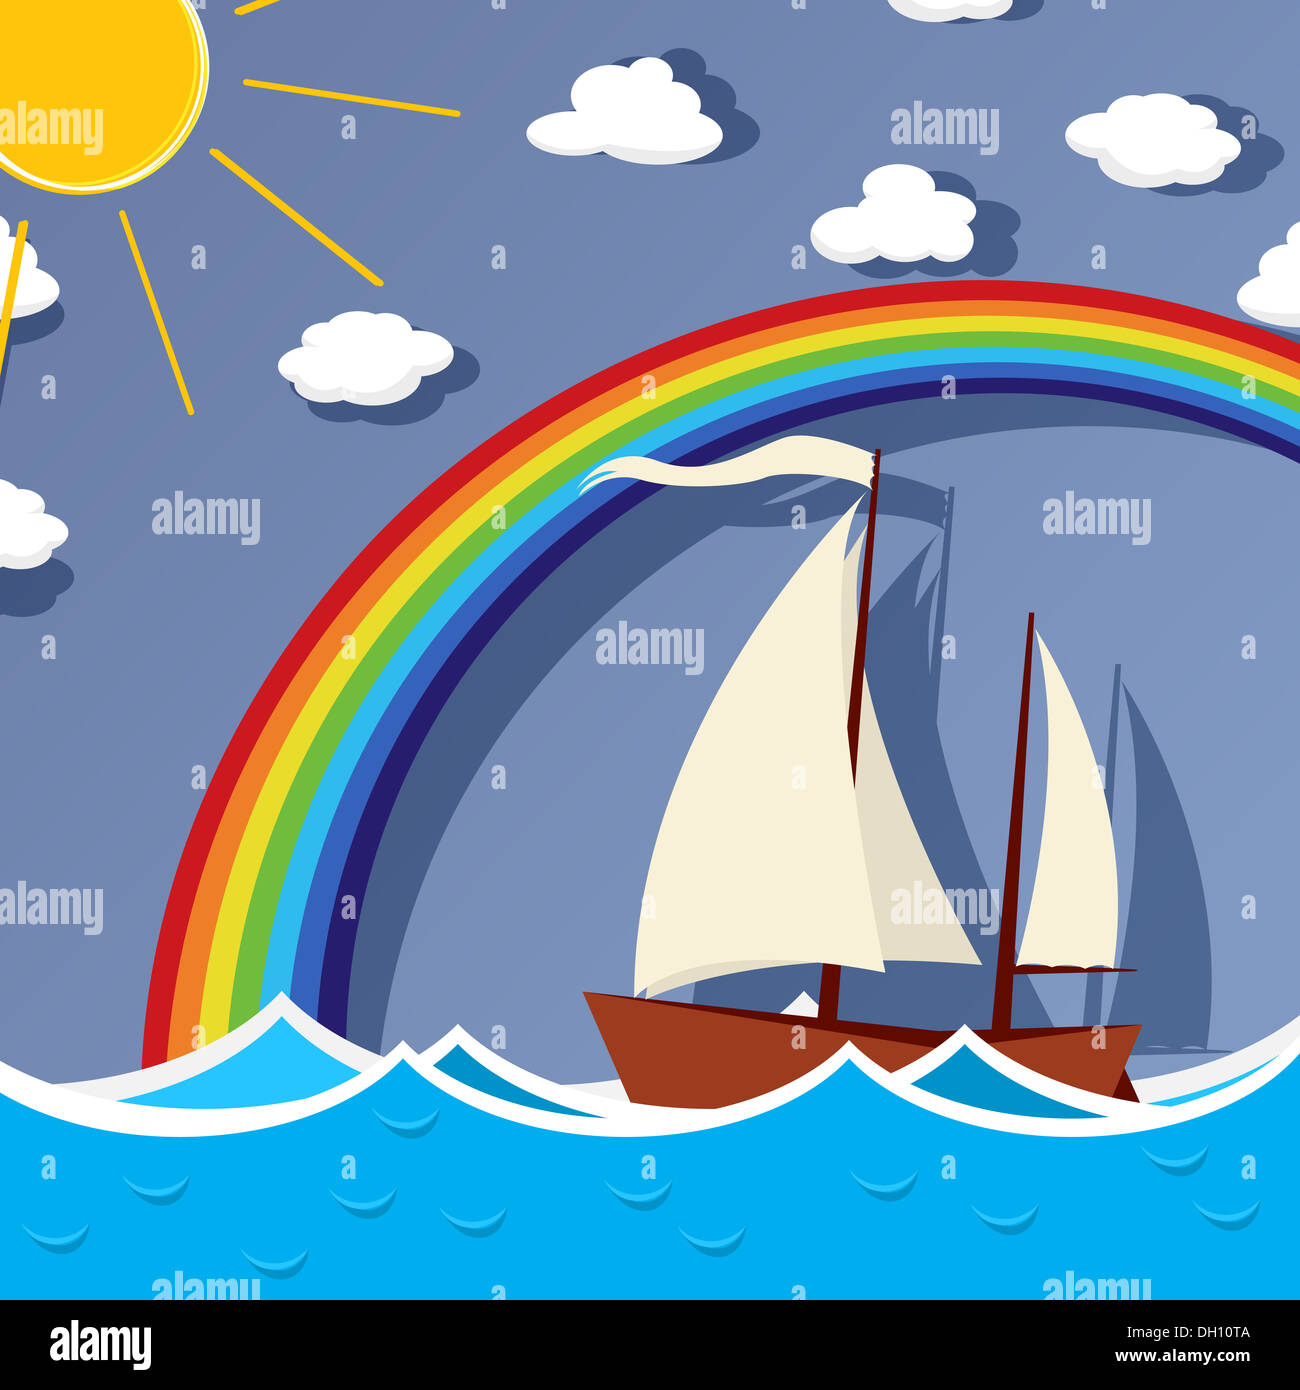 Sailing background card Stock Photo